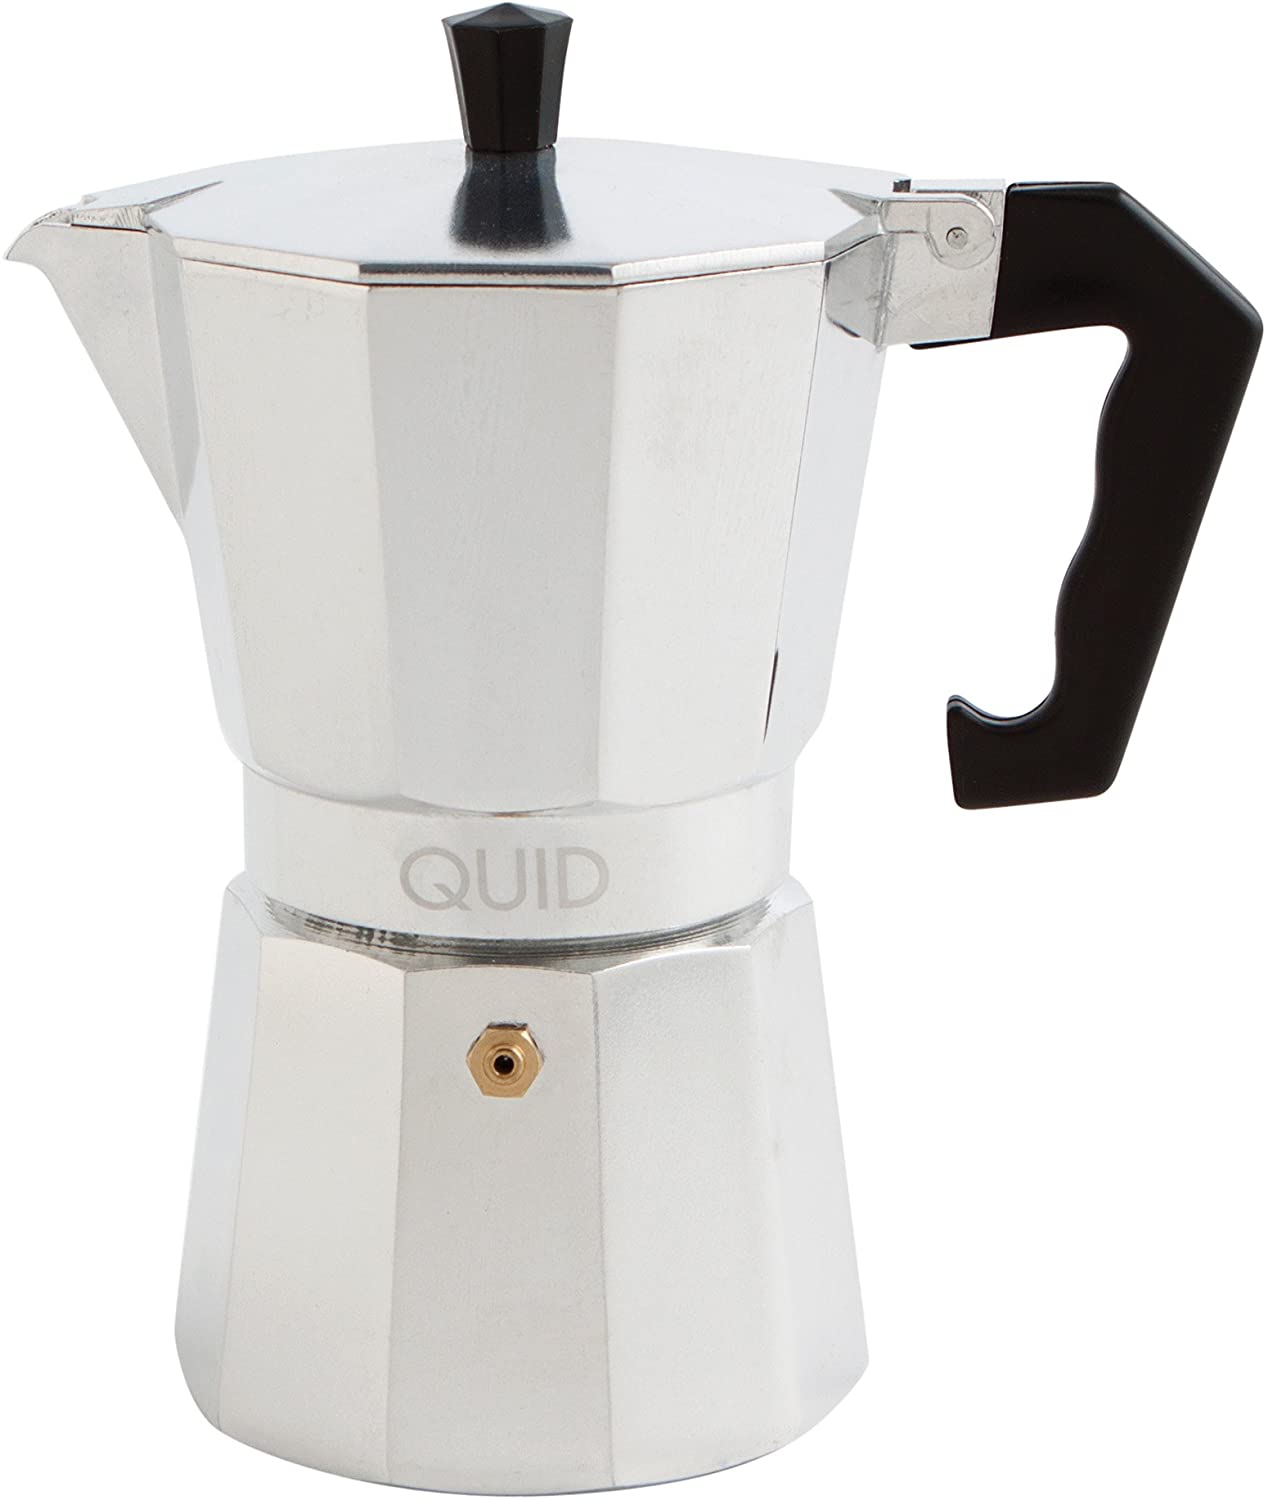 Quid Cesena 9-Cup Coffee Maker